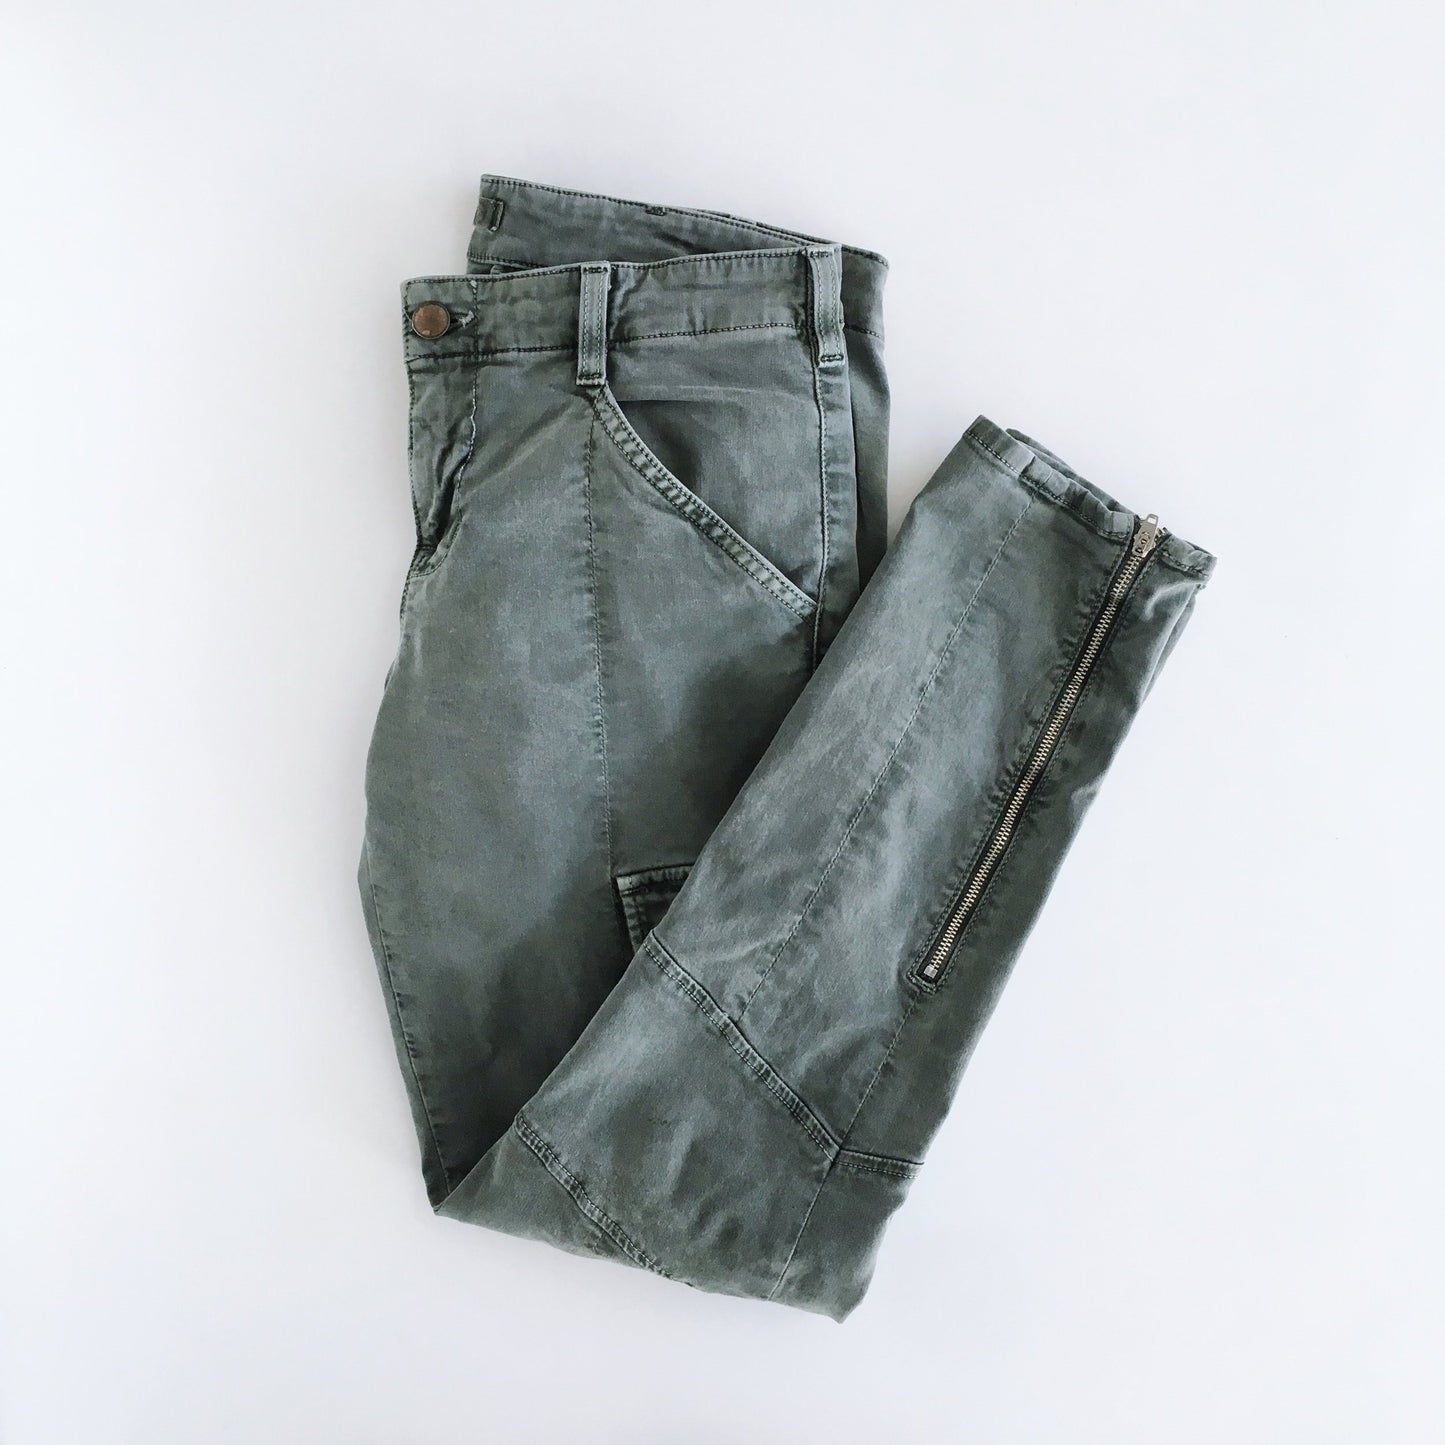 J Brand Houlihan Cargo Skinny Pants - 29x29